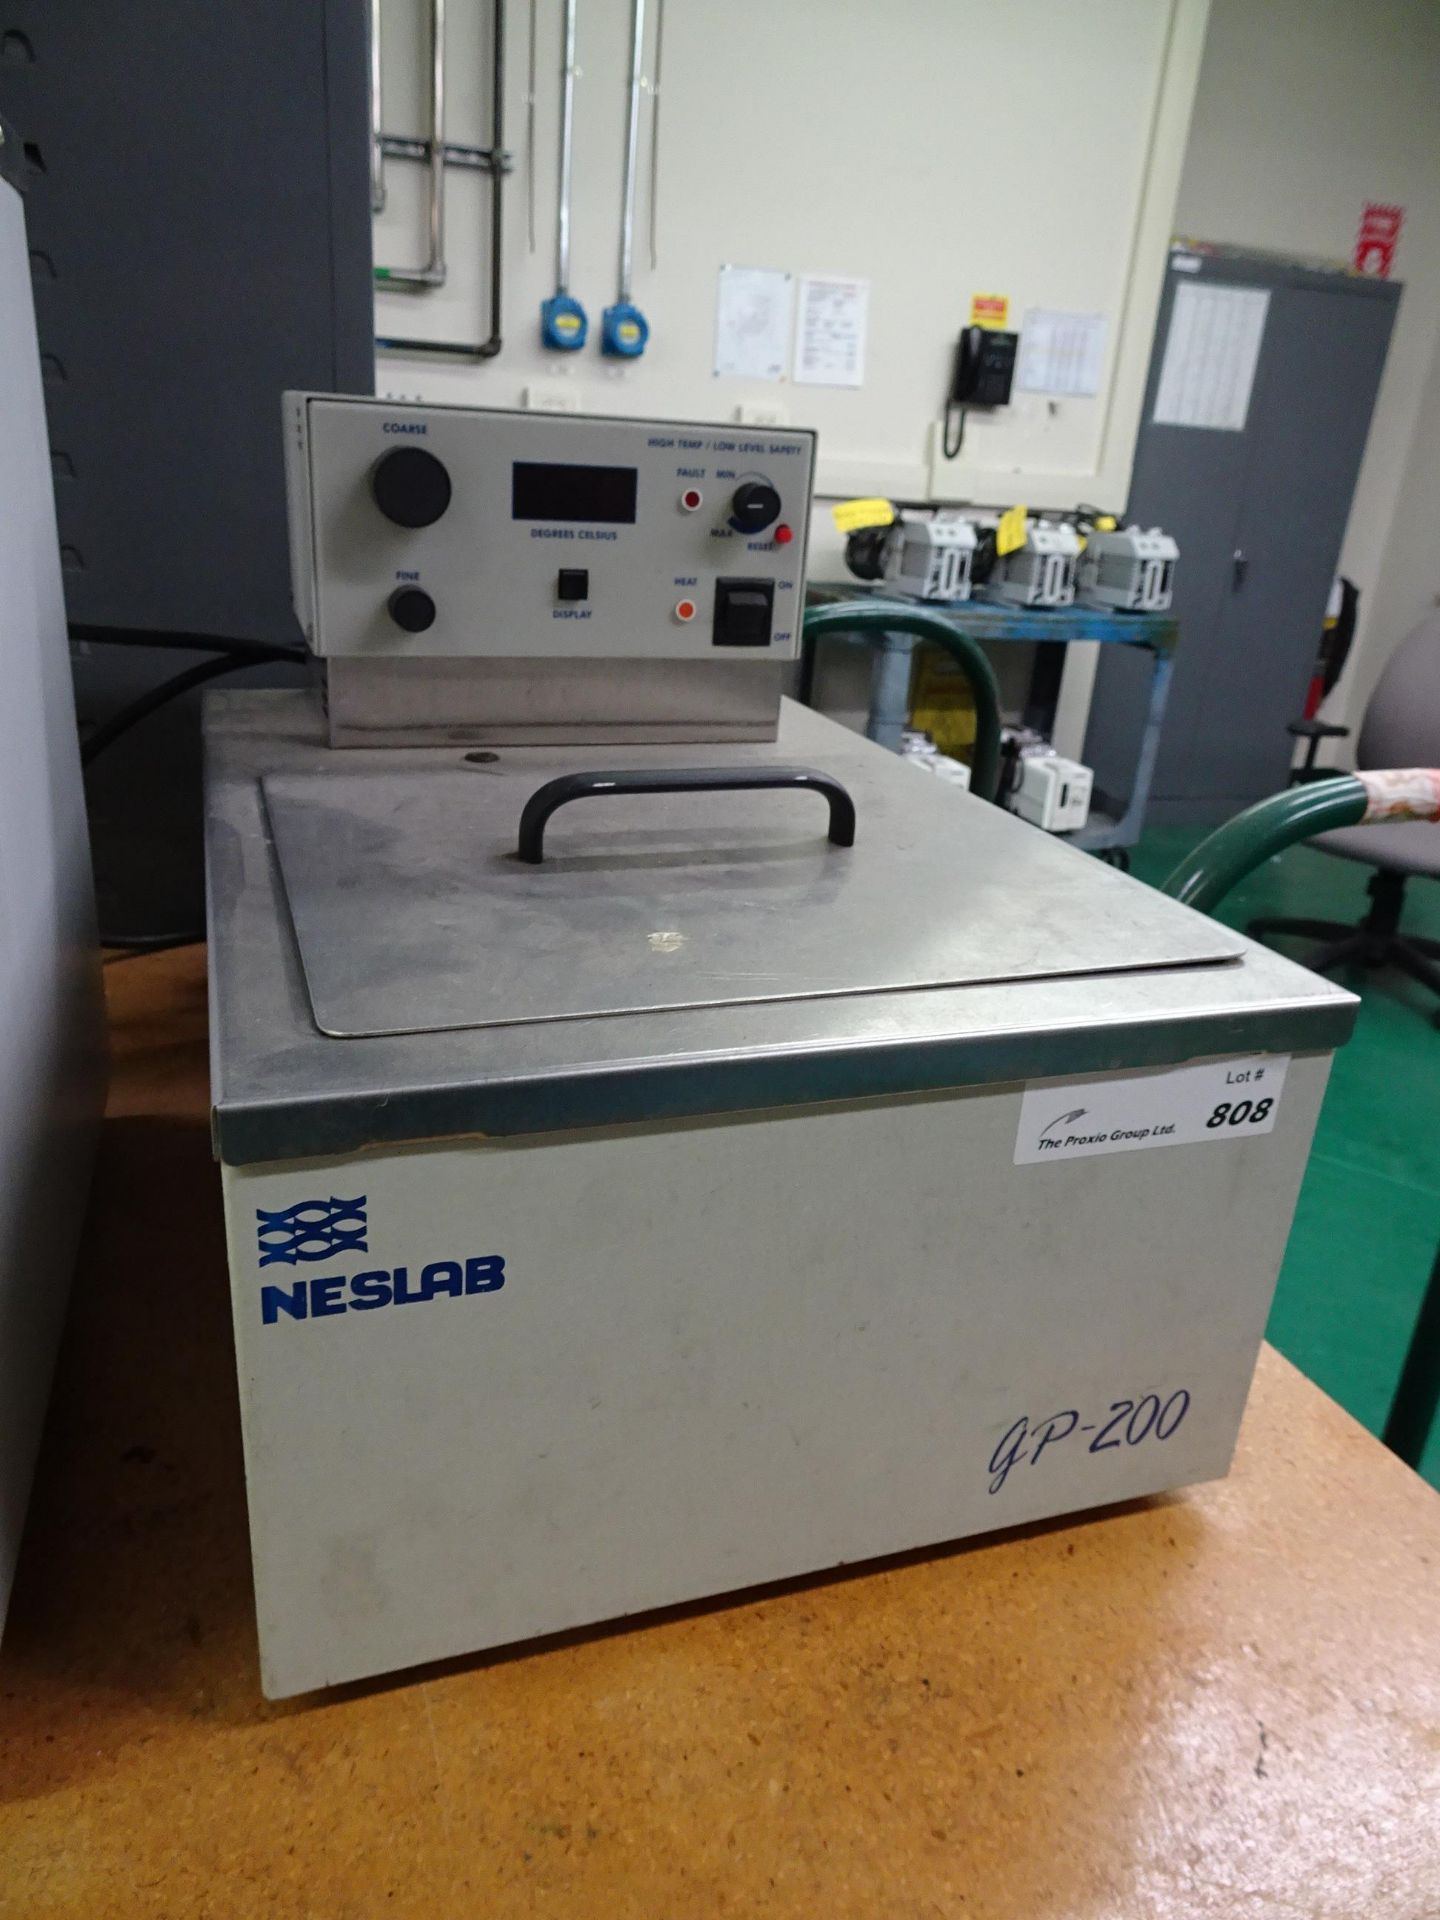 (1) Neslab Model GP-200 Heated Recirculating Water Bath